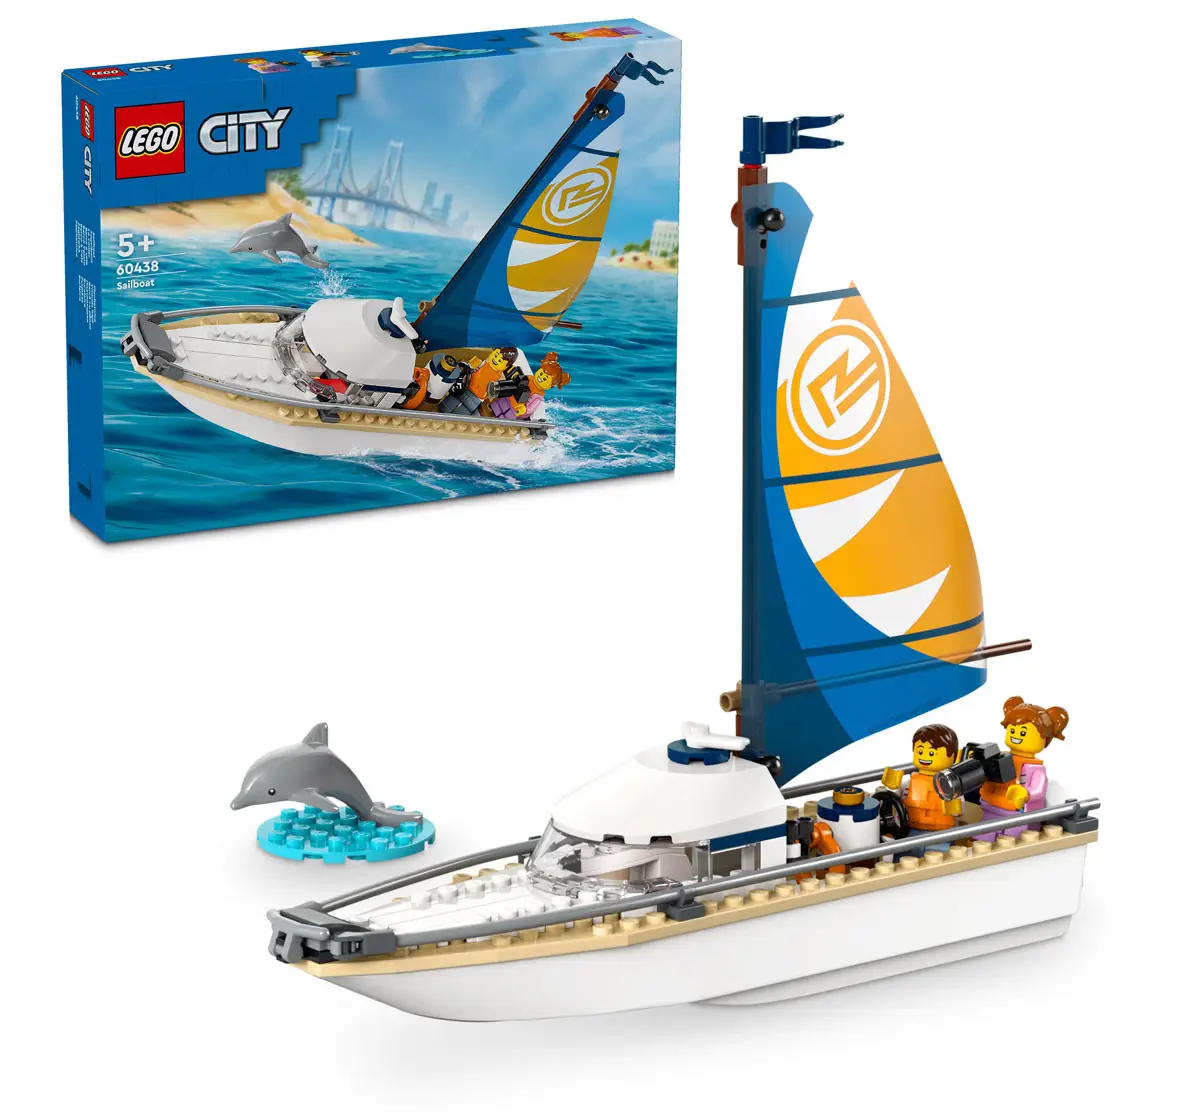 Lego City Sailboat Building Kit 60438 Multicolour For Kids Ages 5Y+ (102 Pieces) 